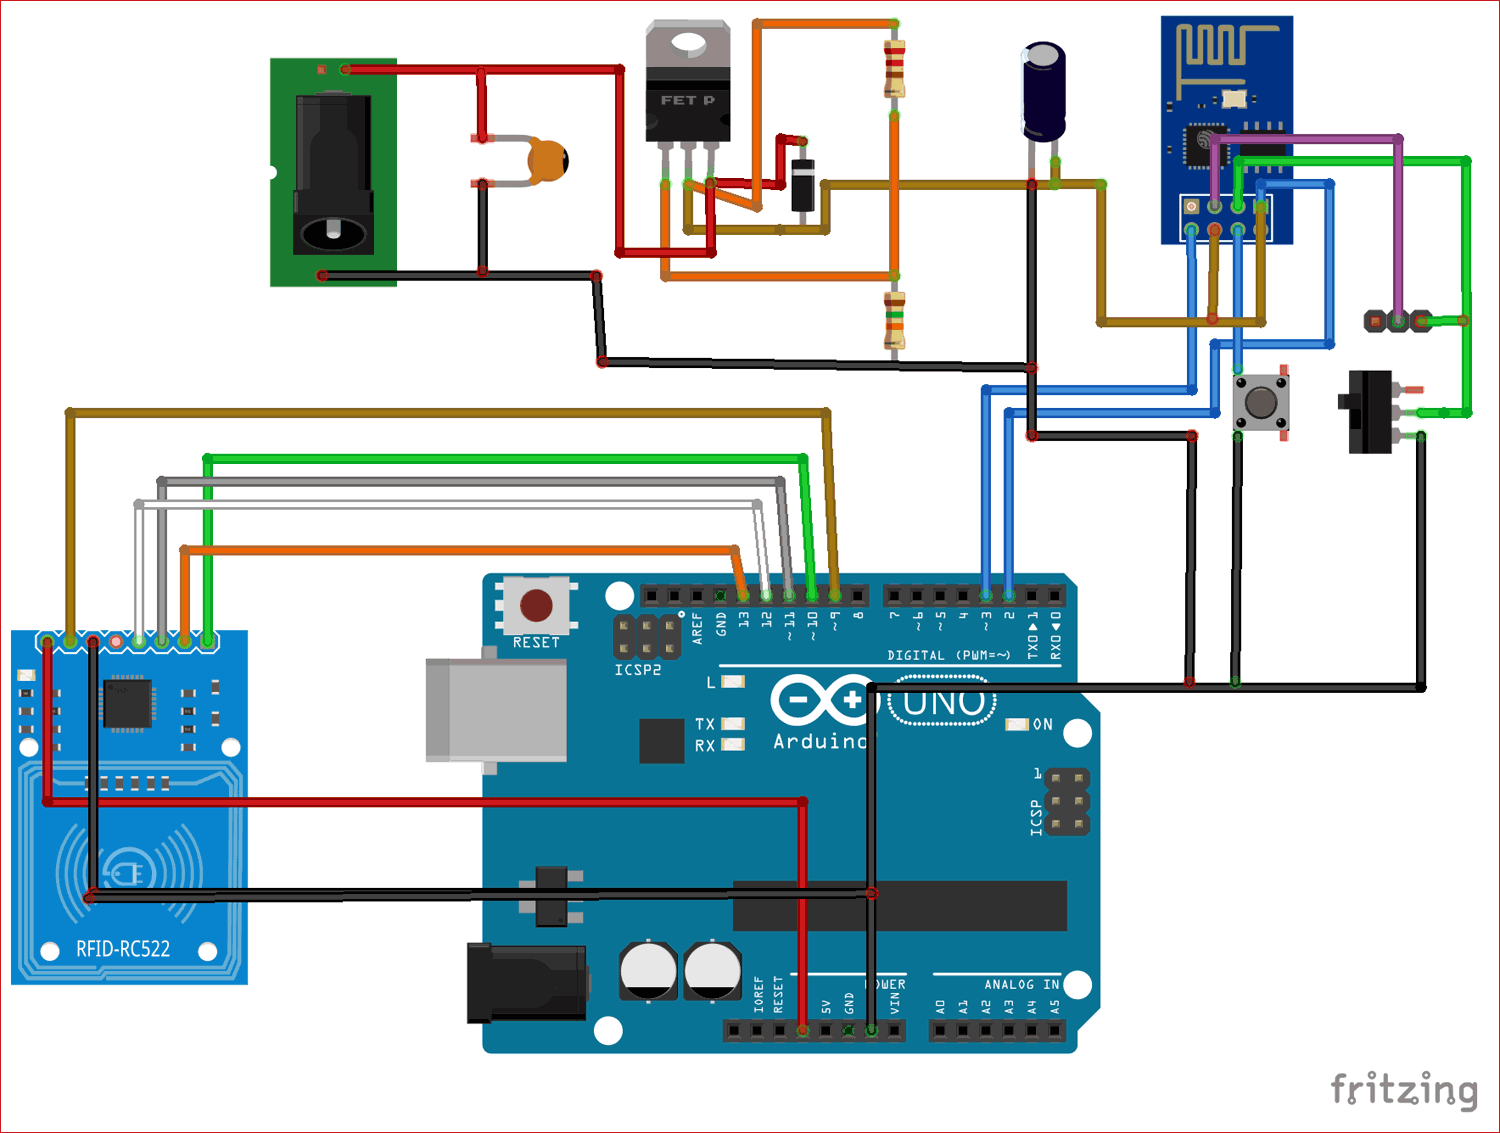 Circuit Diagram for RFID Based Attendance System using Arduino and Adafruit IO